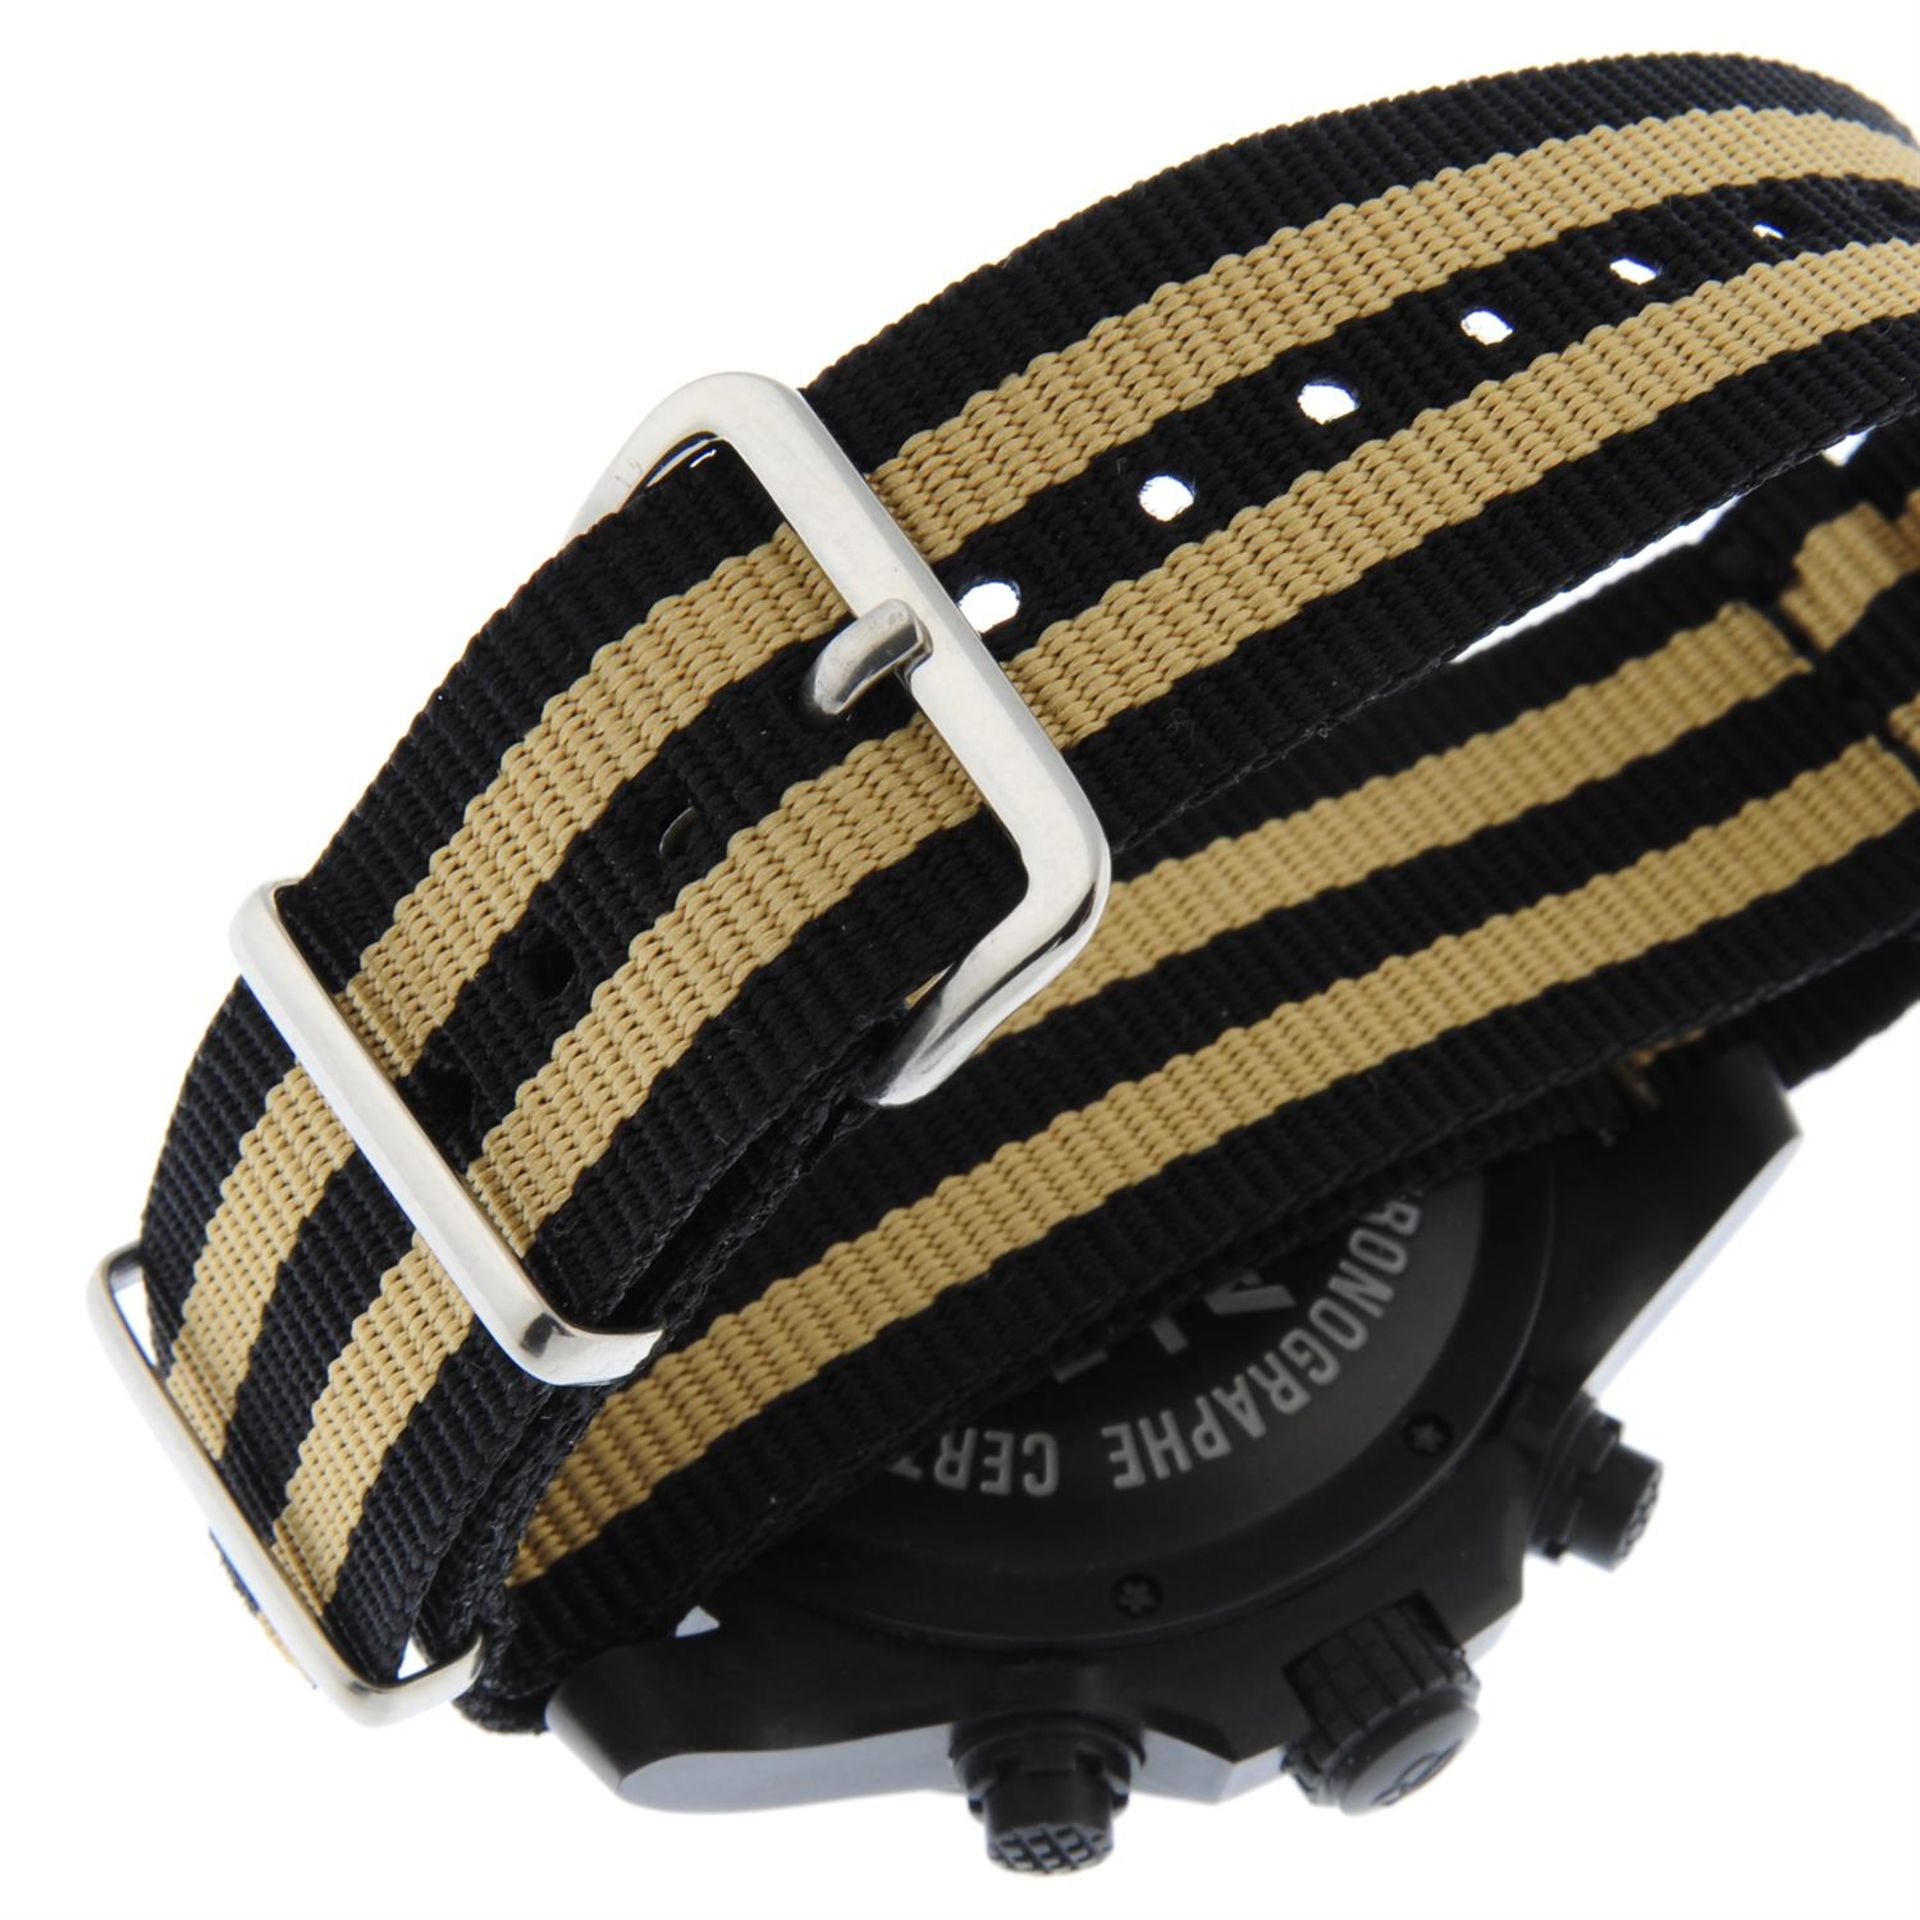 BREITLING - a Breitlight Avenger Hurricane chronograph wrist watch, 45mm. - Image 2 of 5